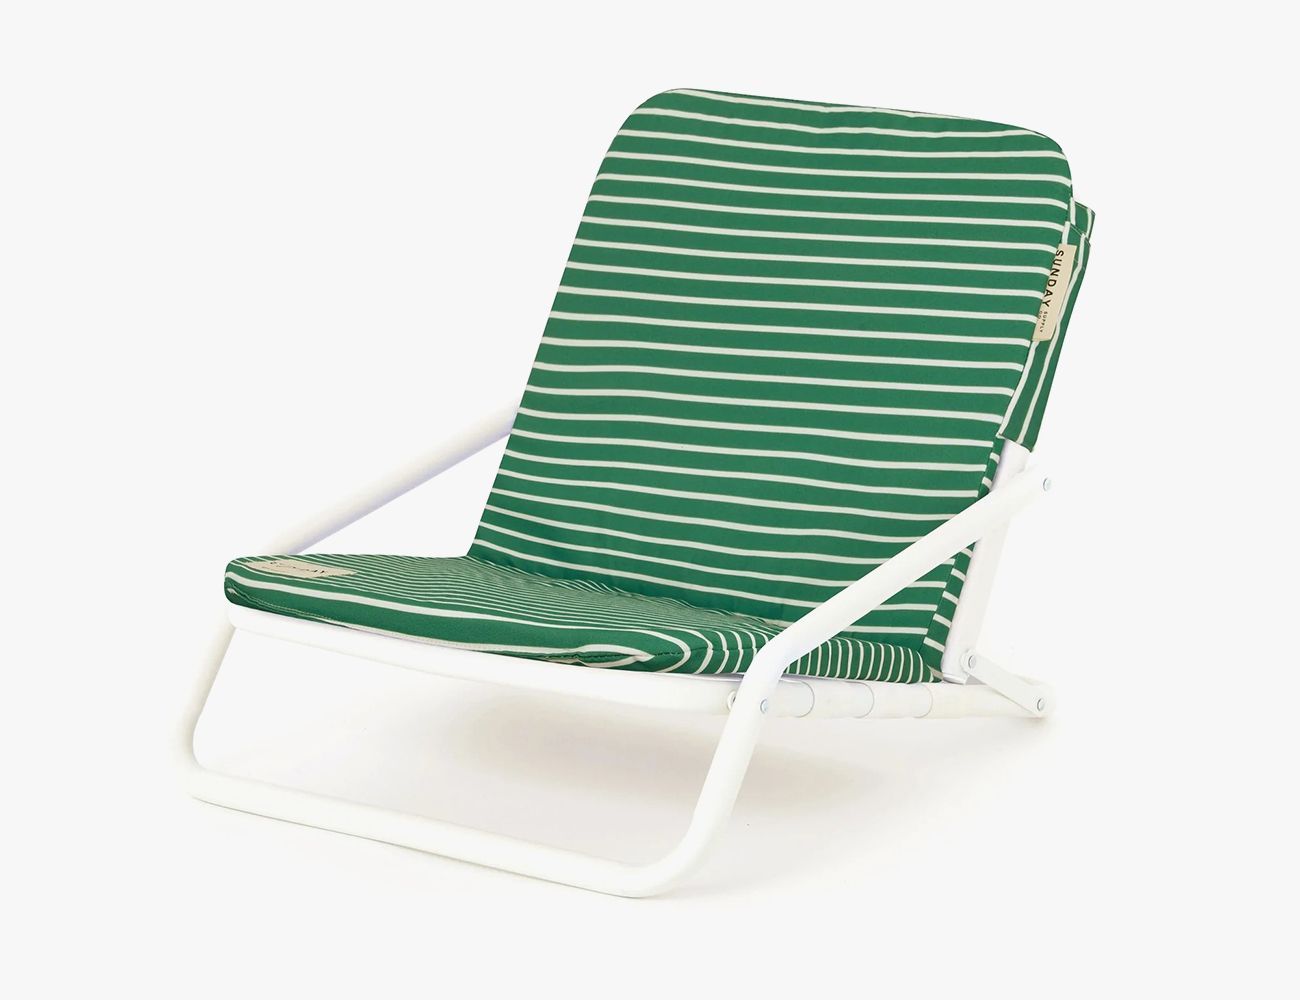 1657134667 Sunday Supply Co Beach Chairs Refresh Inline 1657134660 